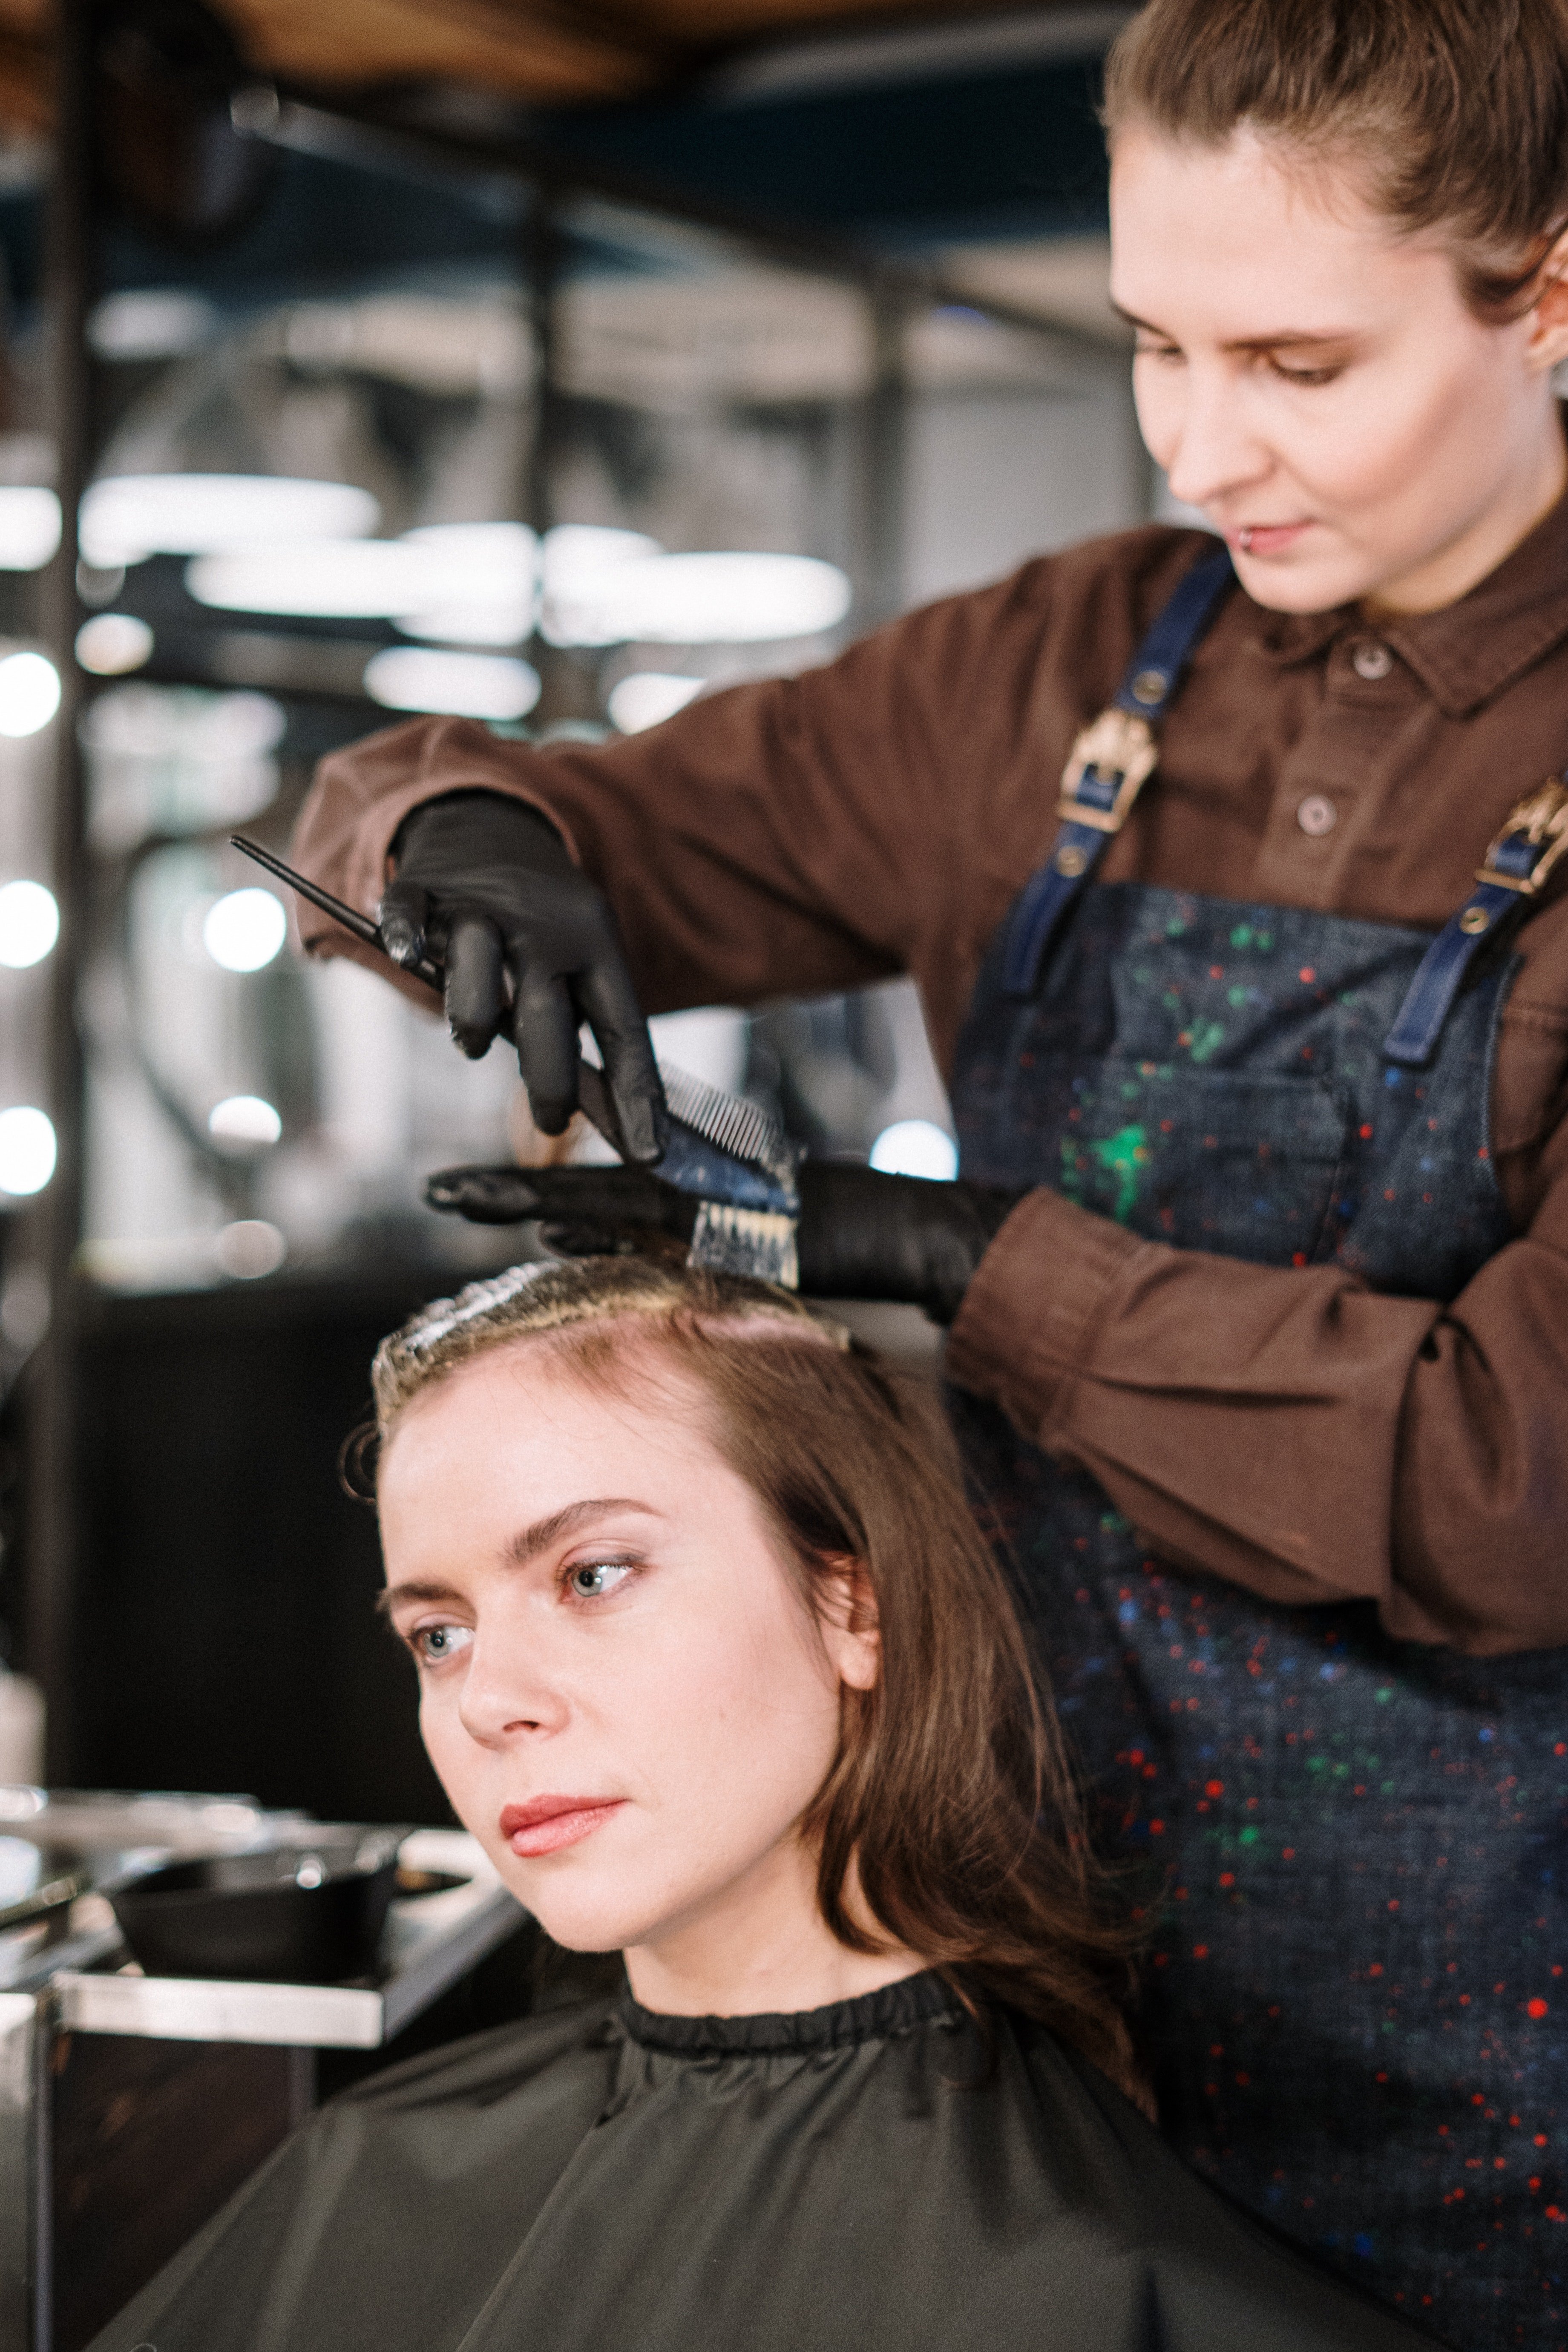 Woman getting a hair treatment at a salon | Source: Pexels